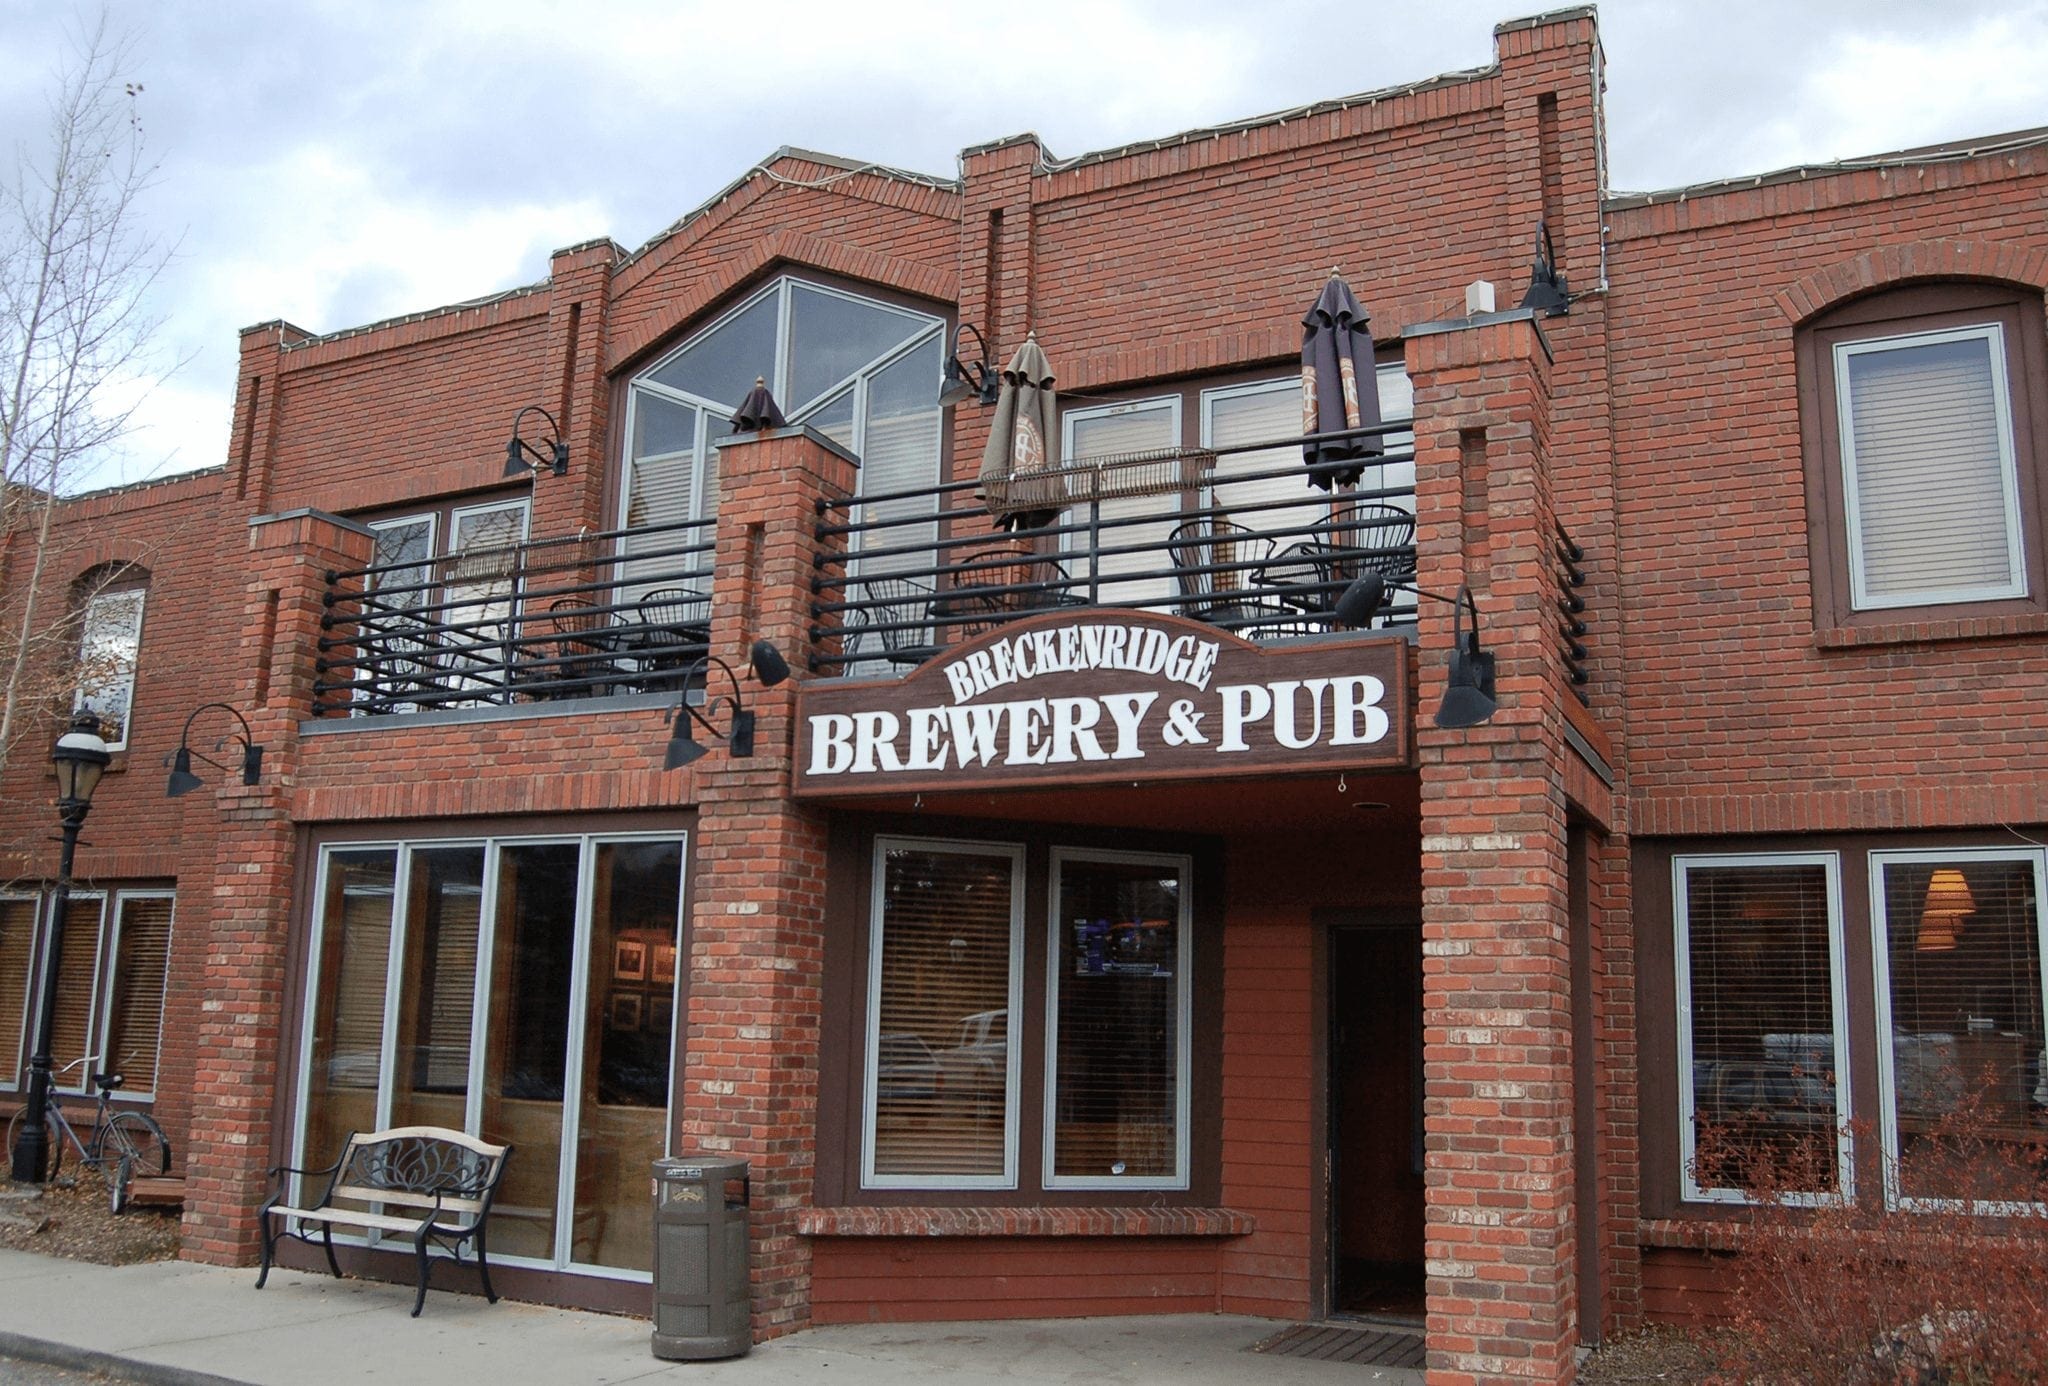 Breckenridge Brewery and Pub exterior